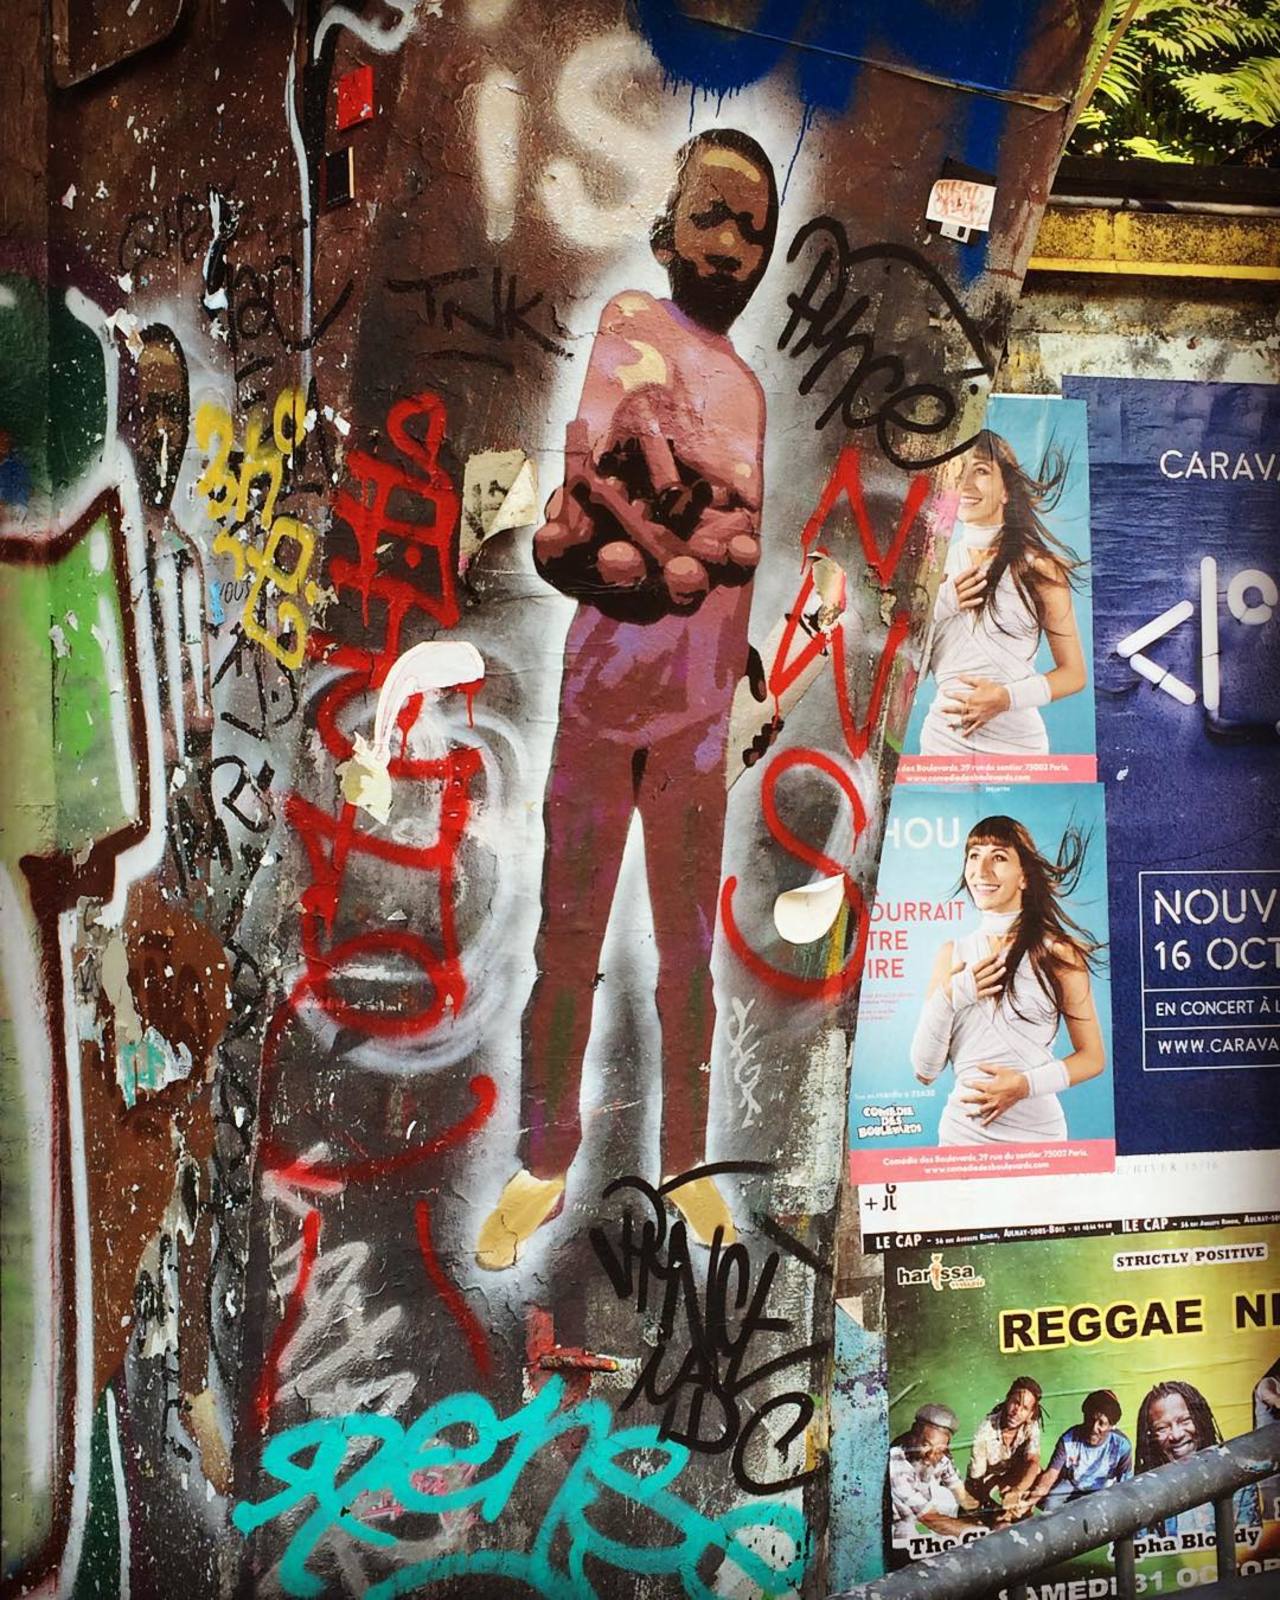 #Paris #graffiti photo by @allaboutparisandbeyond http://ift.tt/1WQWK6z #StreetArt http://t.co/koJUUiF6uA